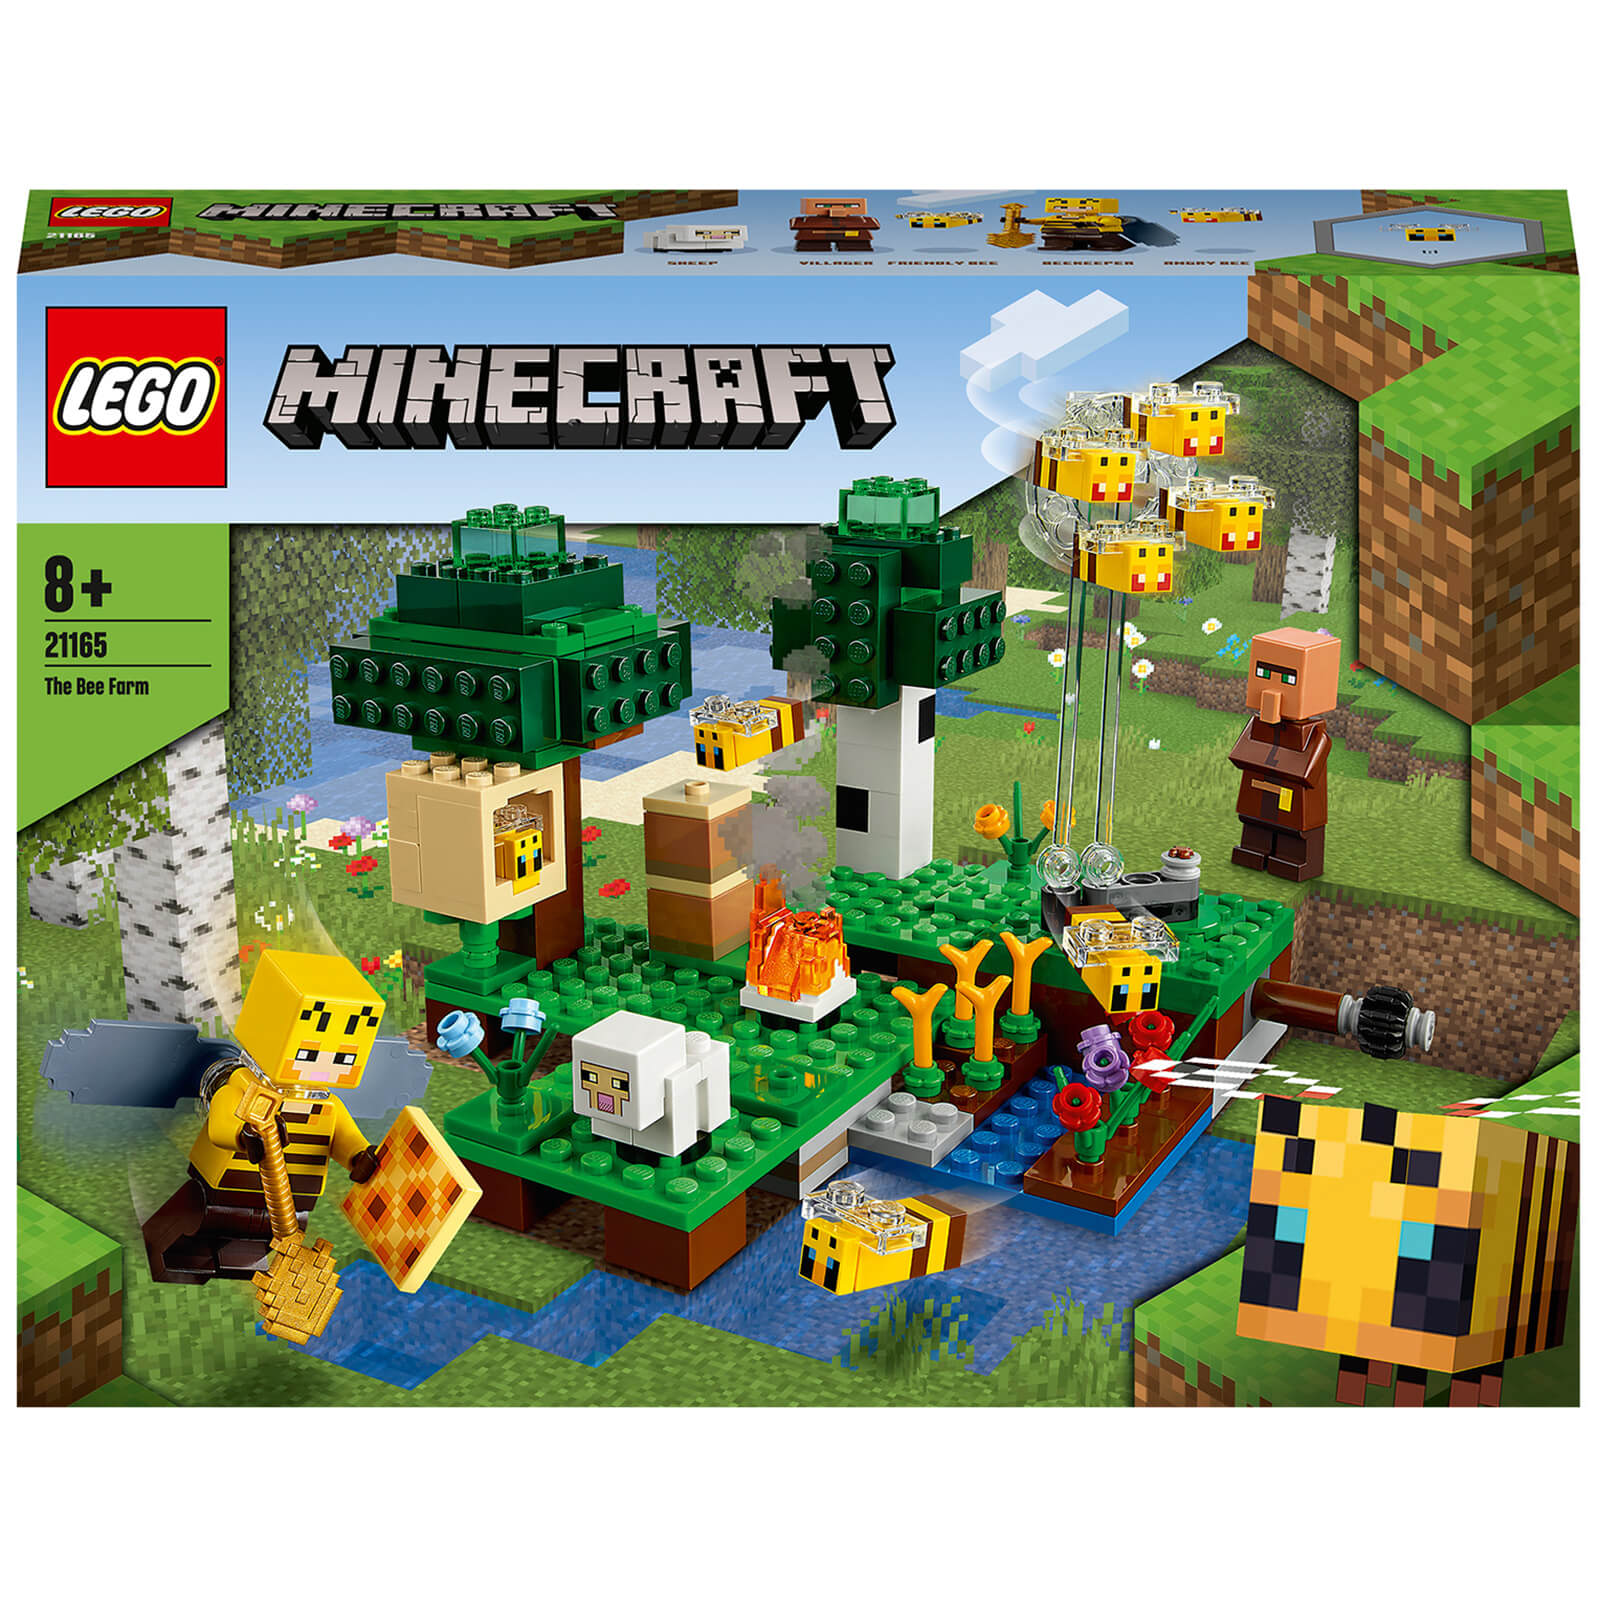 LEGO Minecraft: The Bee Farm Building Set (21165)